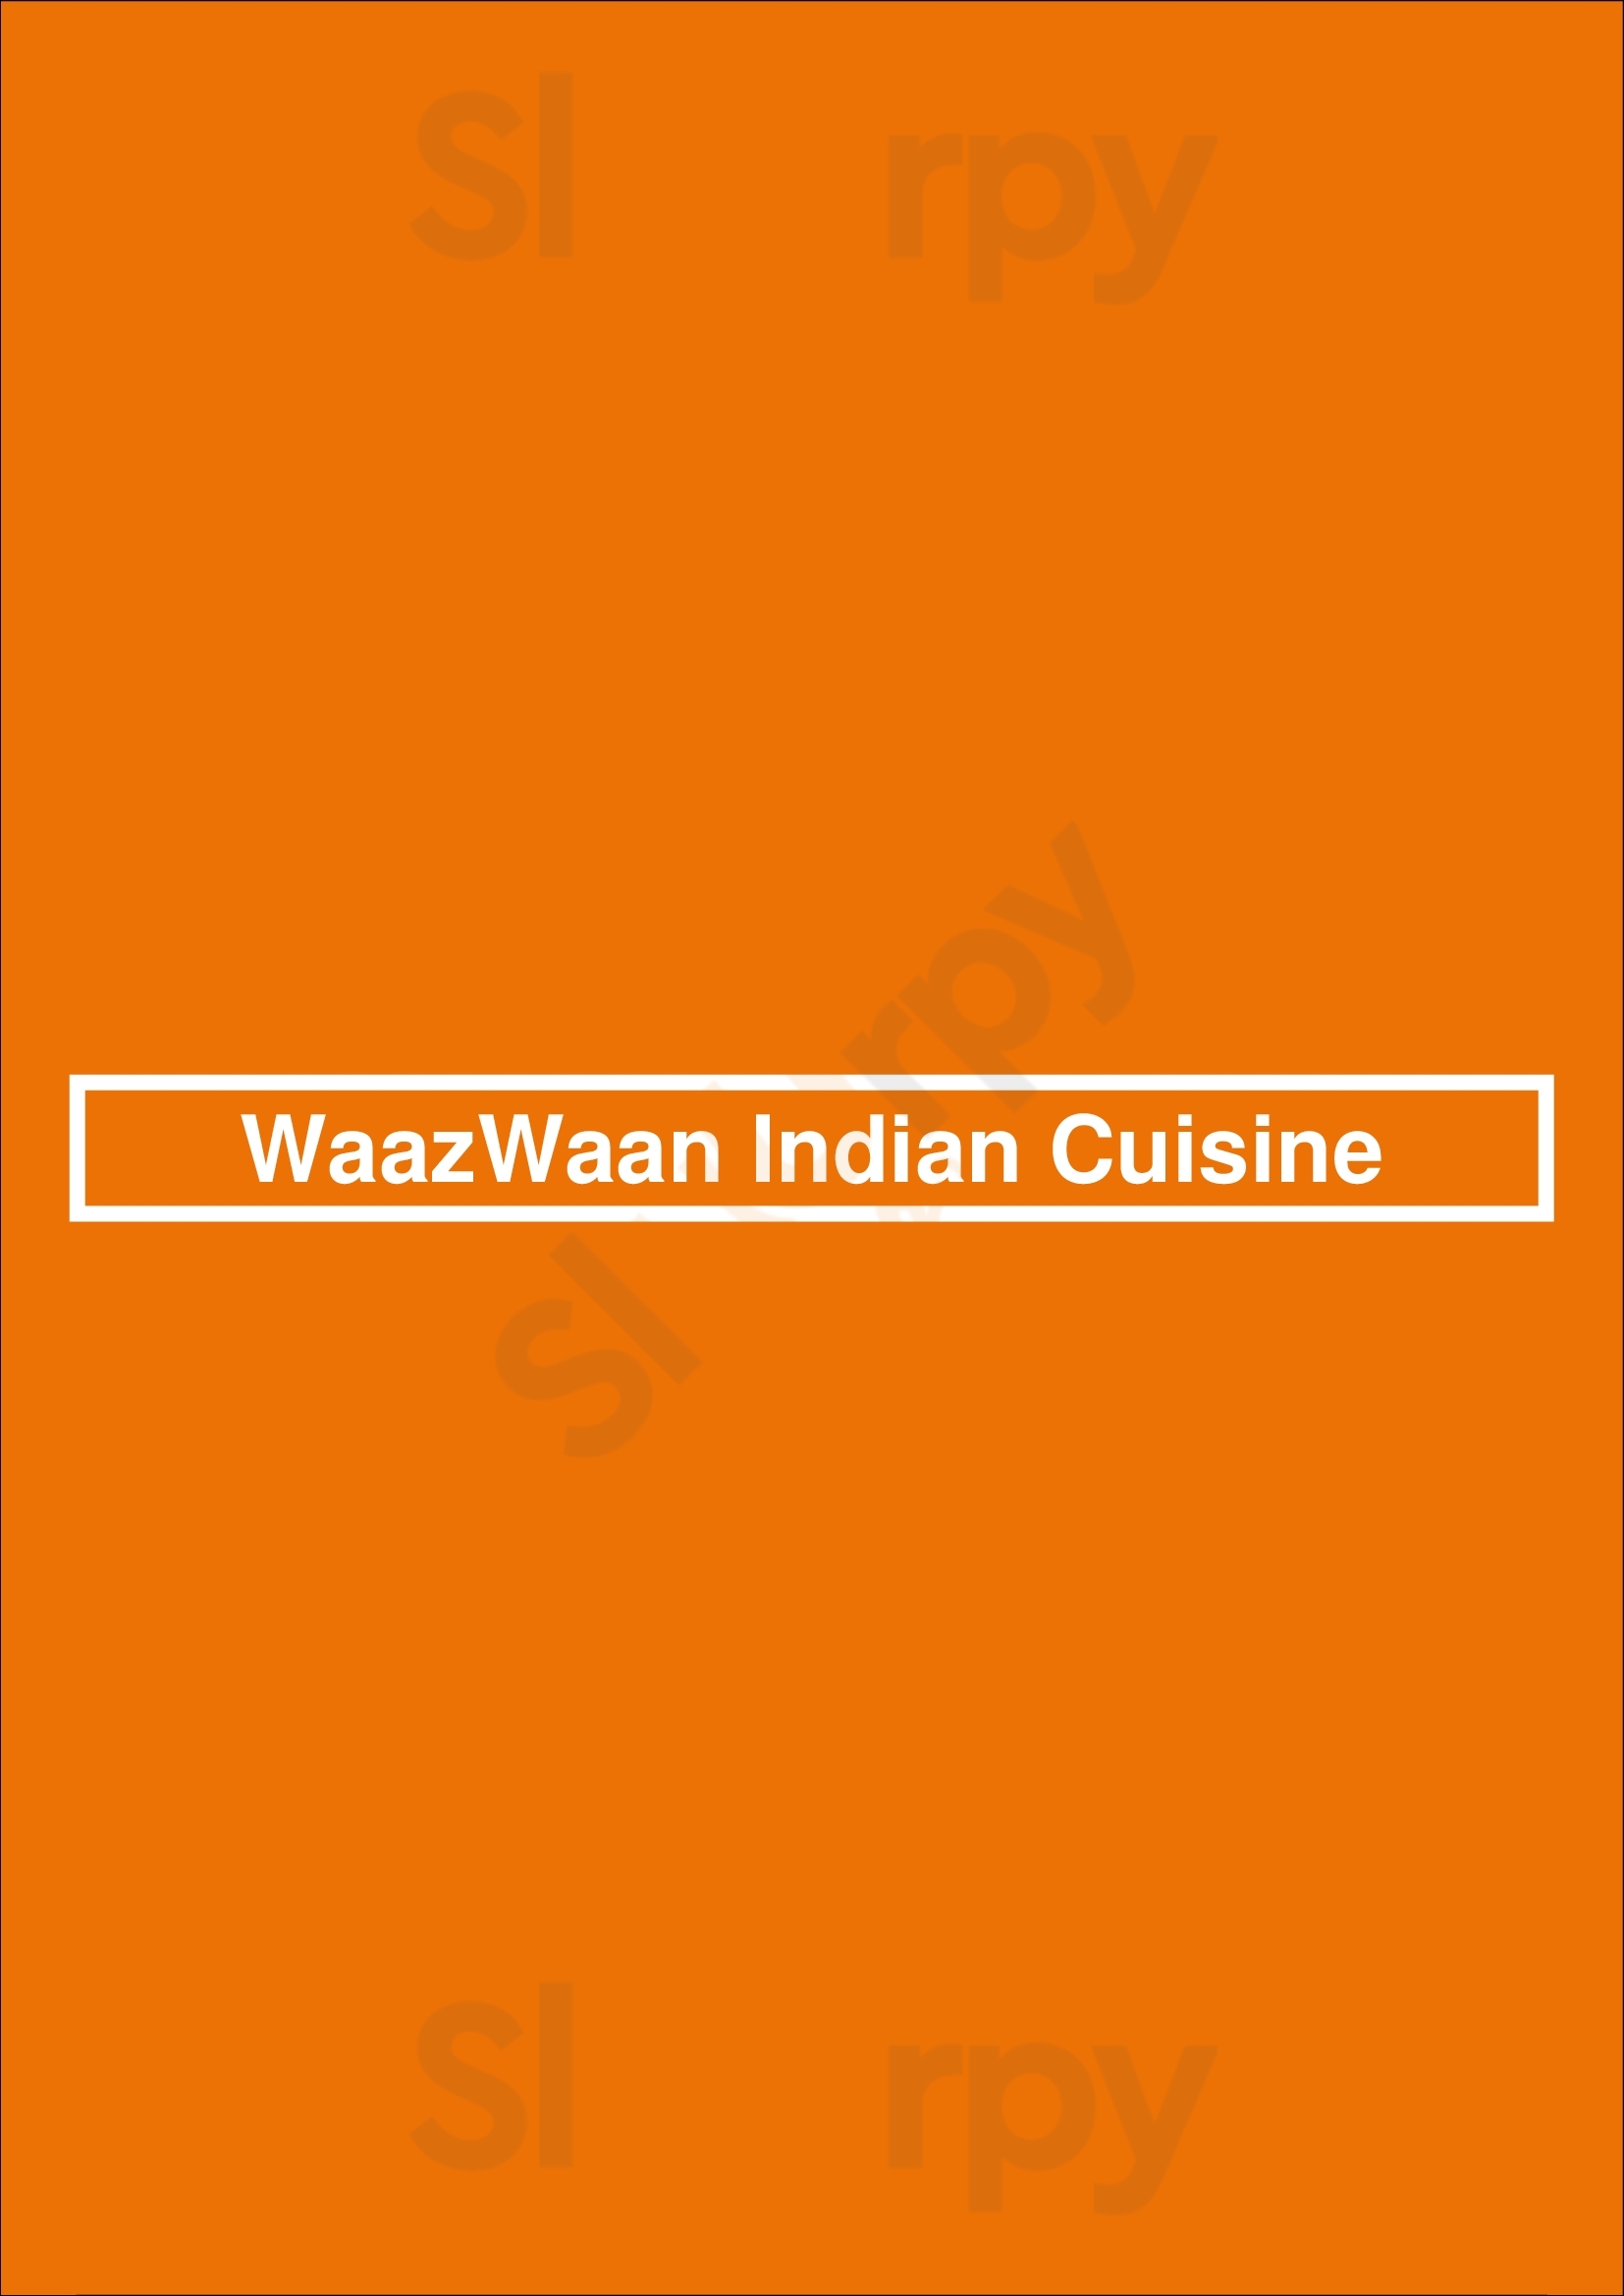 Waazwaan Indian Cuisine Crows Nest Menu - 1